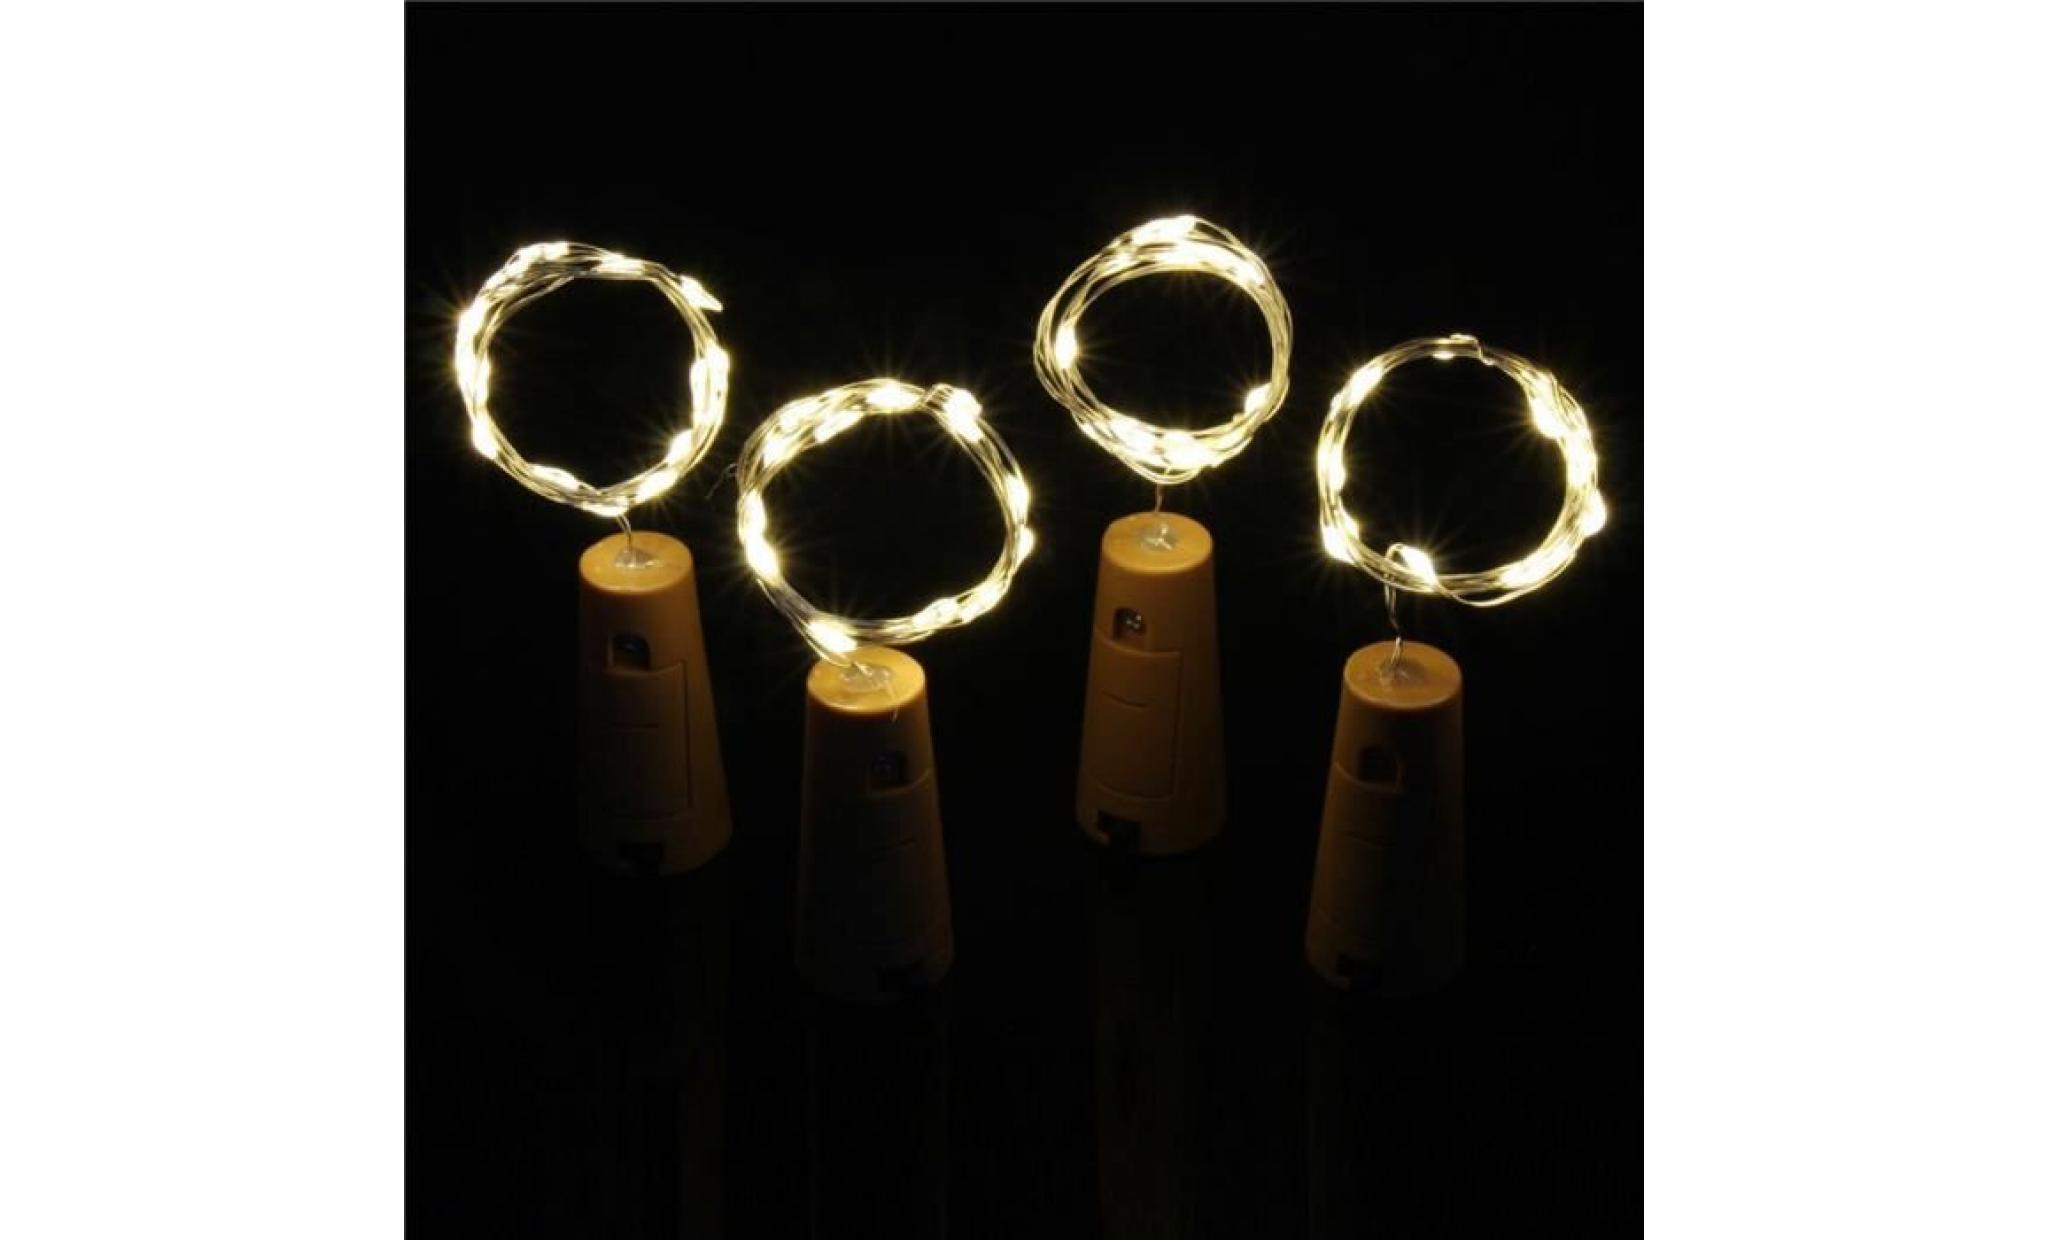 wine bottle cork lights copper wire string lights for wedding party decor c qinhig1599